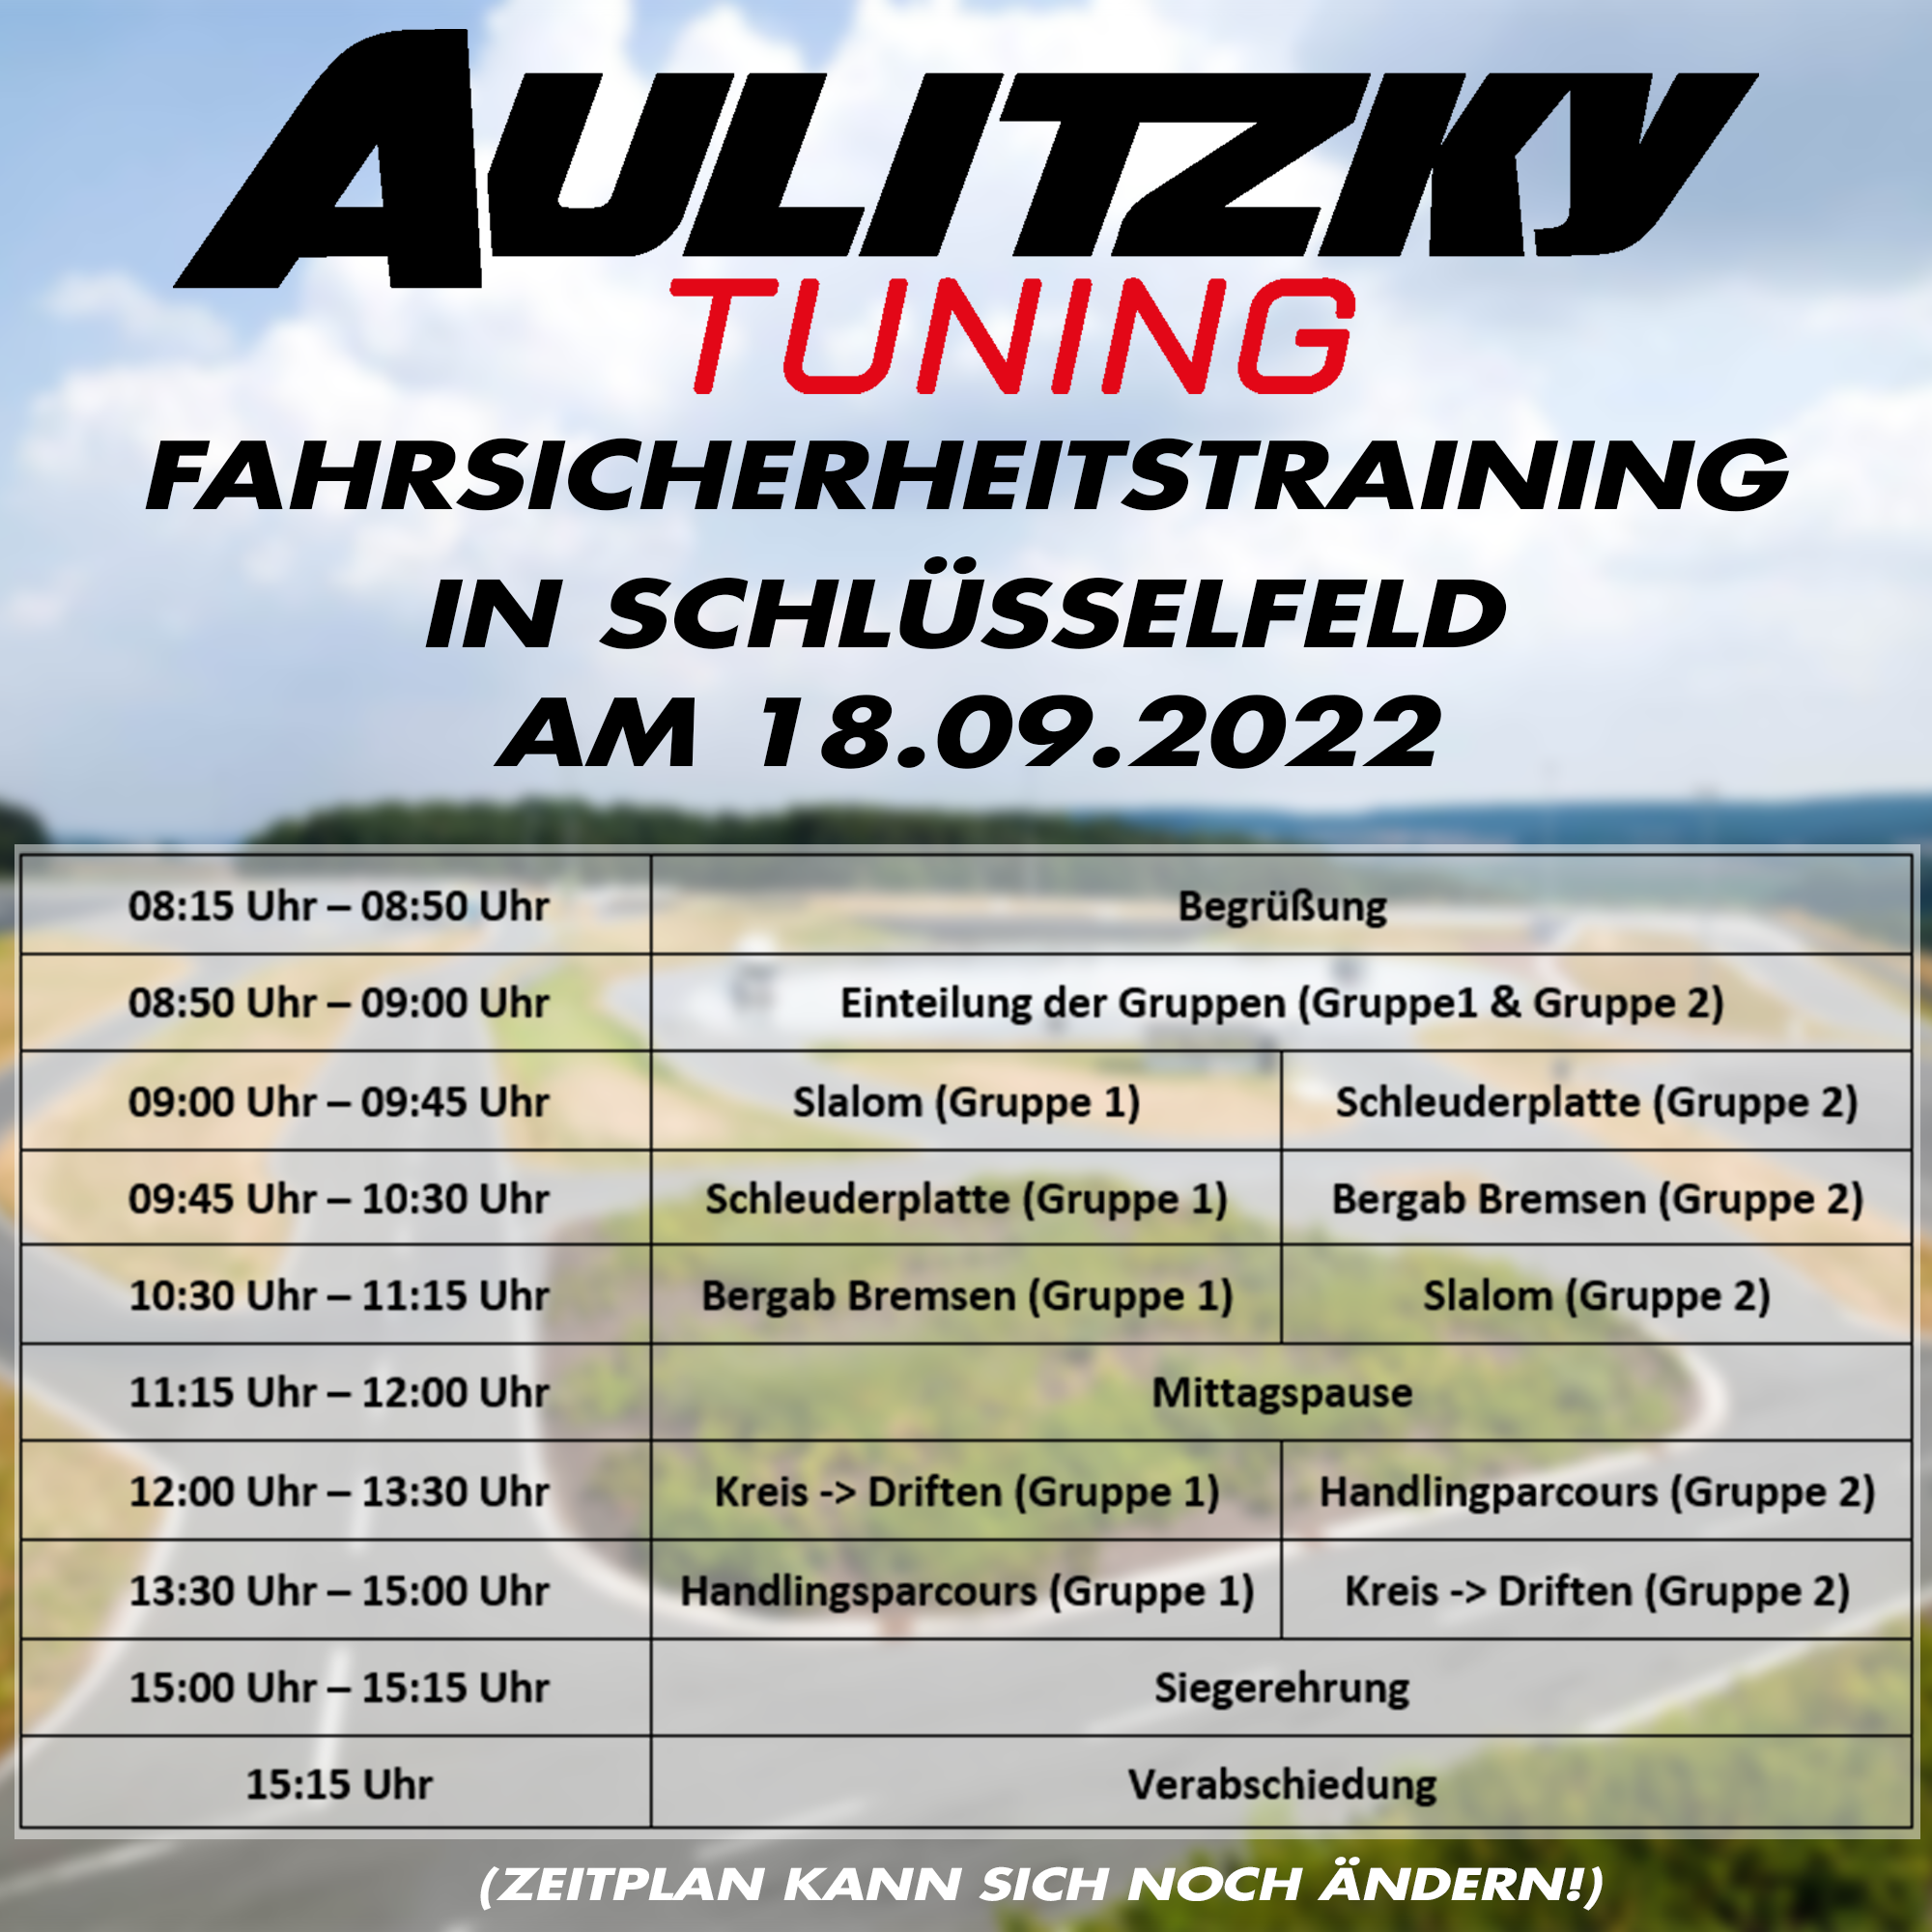 Aulitzky Tuning Fahrsicherheitstraining am 18.09.2022